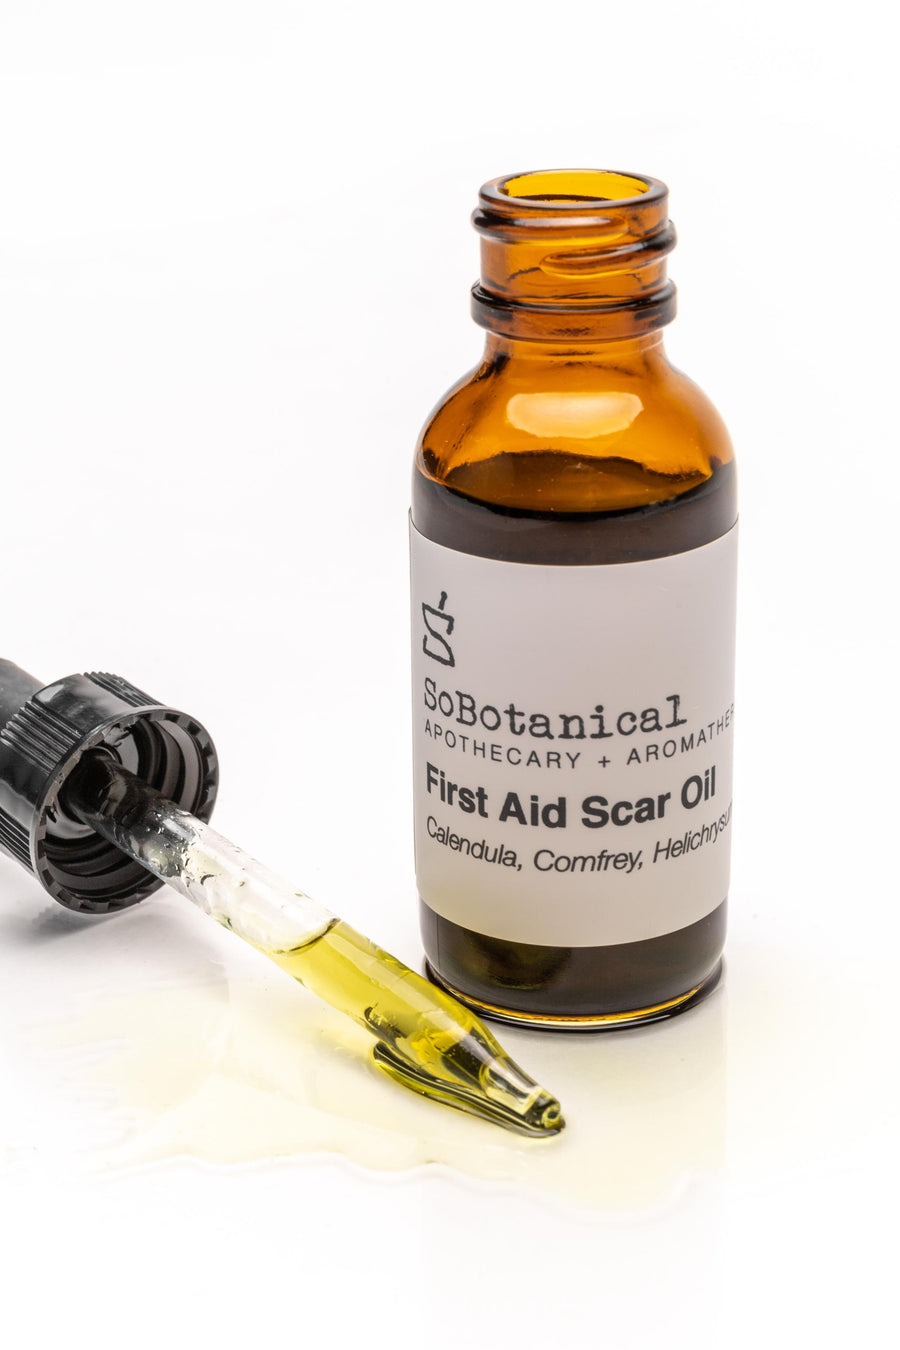 First Aid Scar Oil